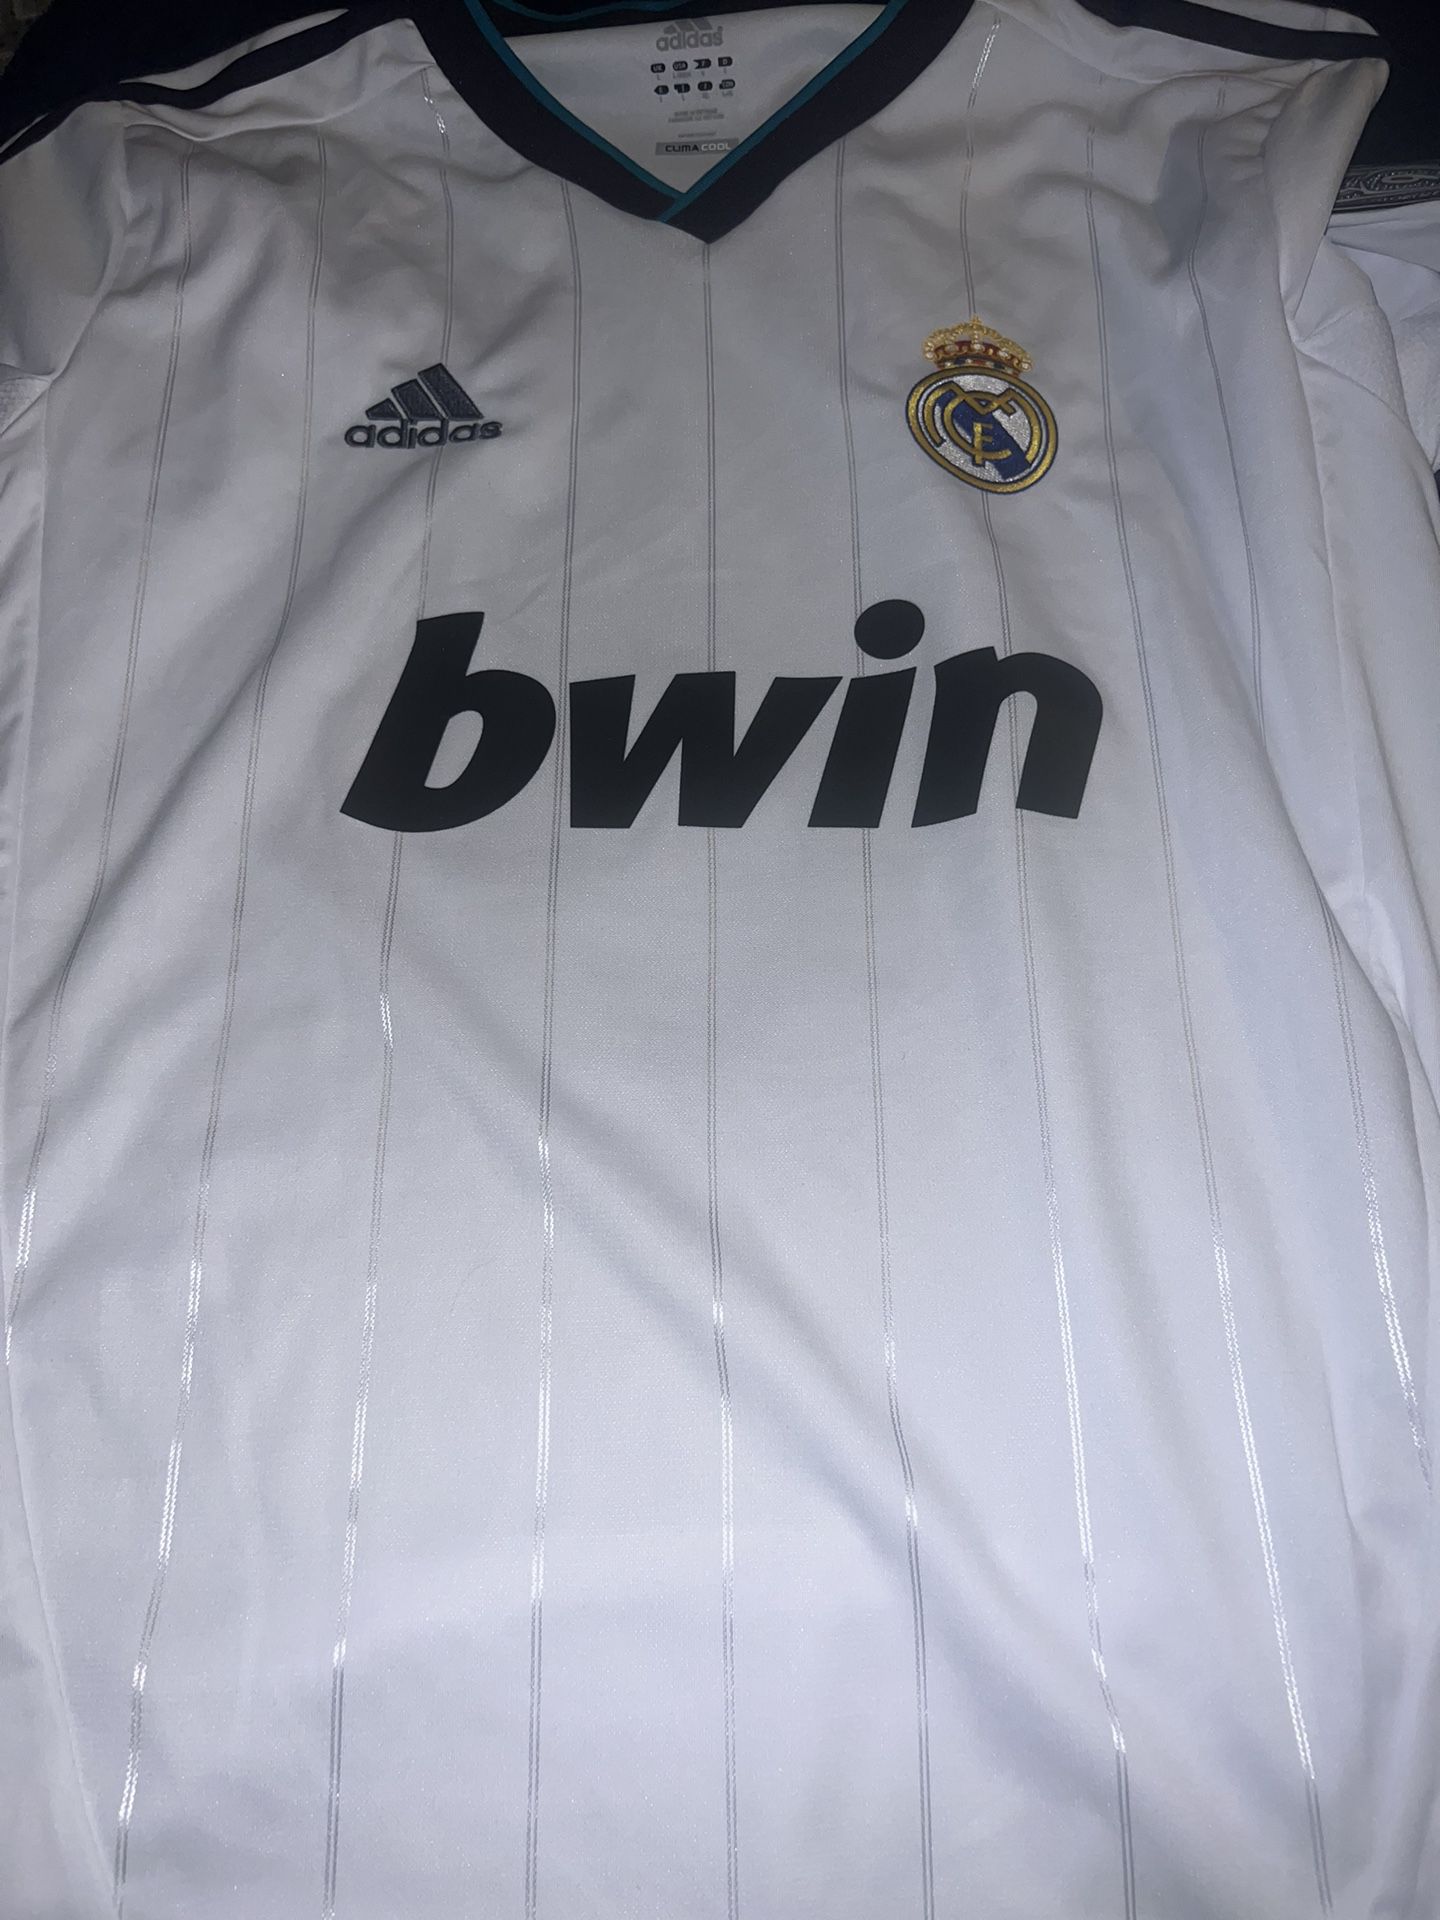 Real Madrid KAKA Jersey 2012-13  Large 